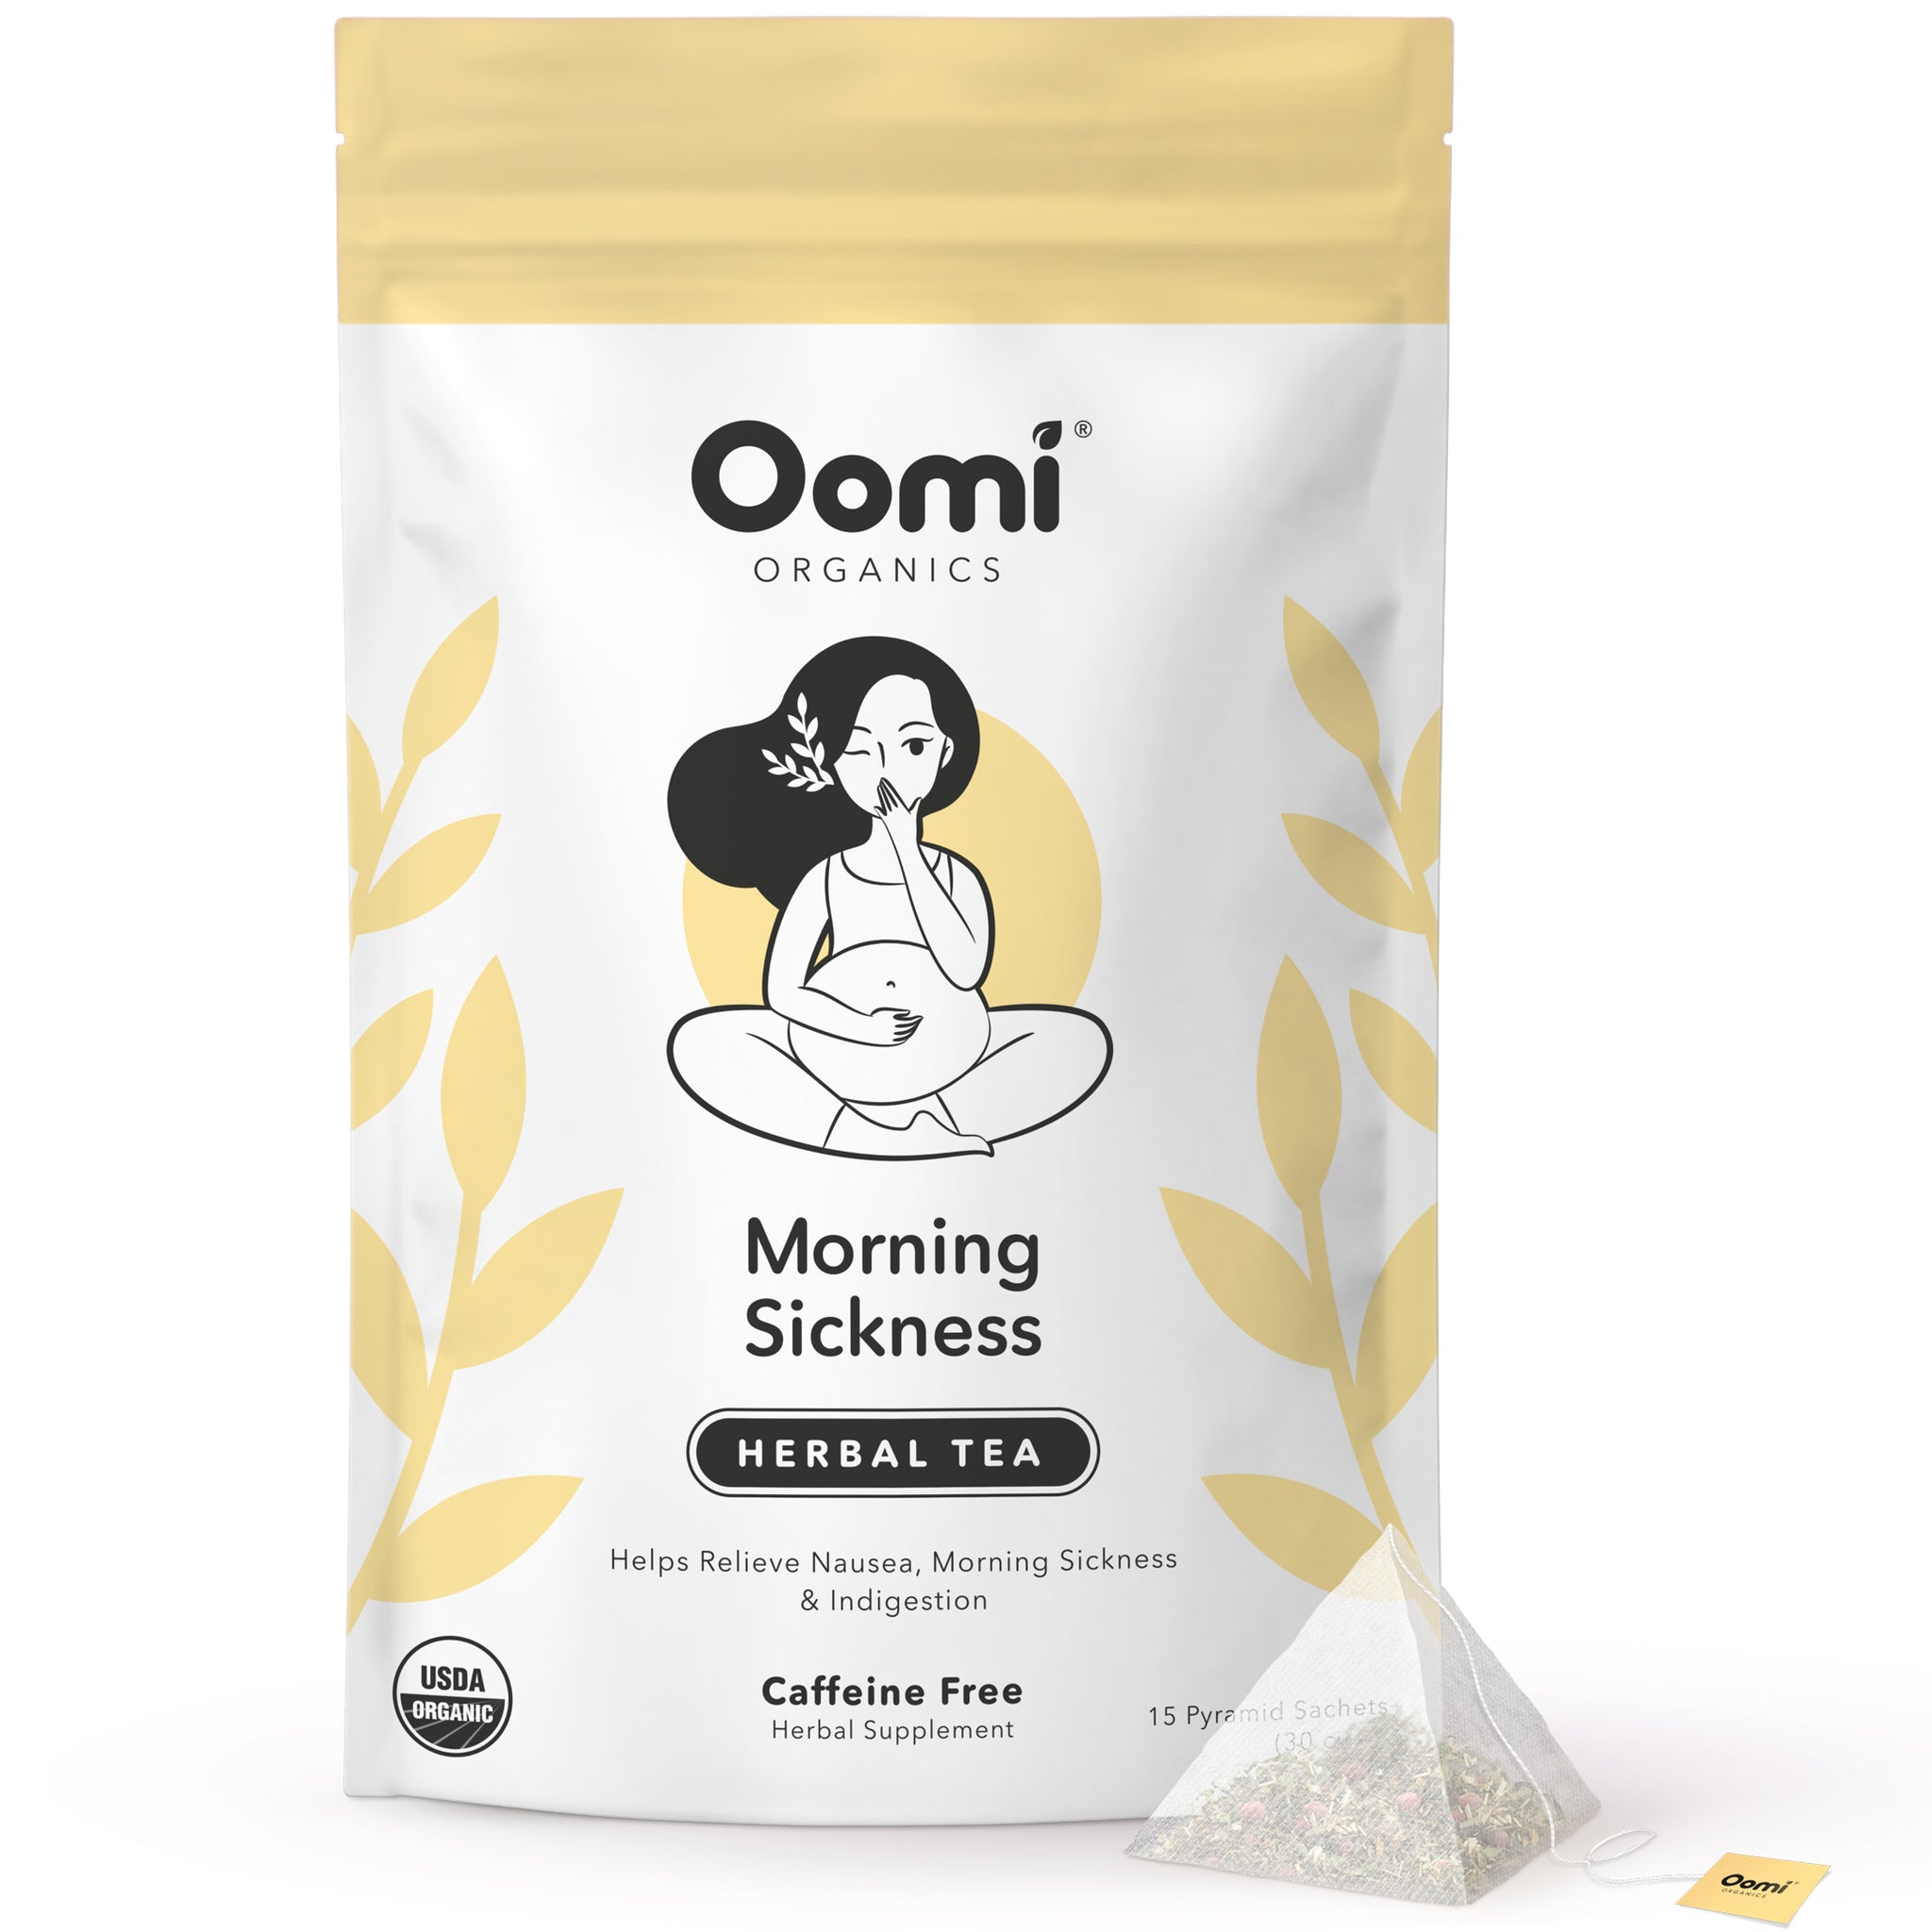 Oomi™ Organics Tummy Buddy Caffeine Free Herbal Tea Pyramid Sachets for  Baby & Kids, 15 ct - Kroger